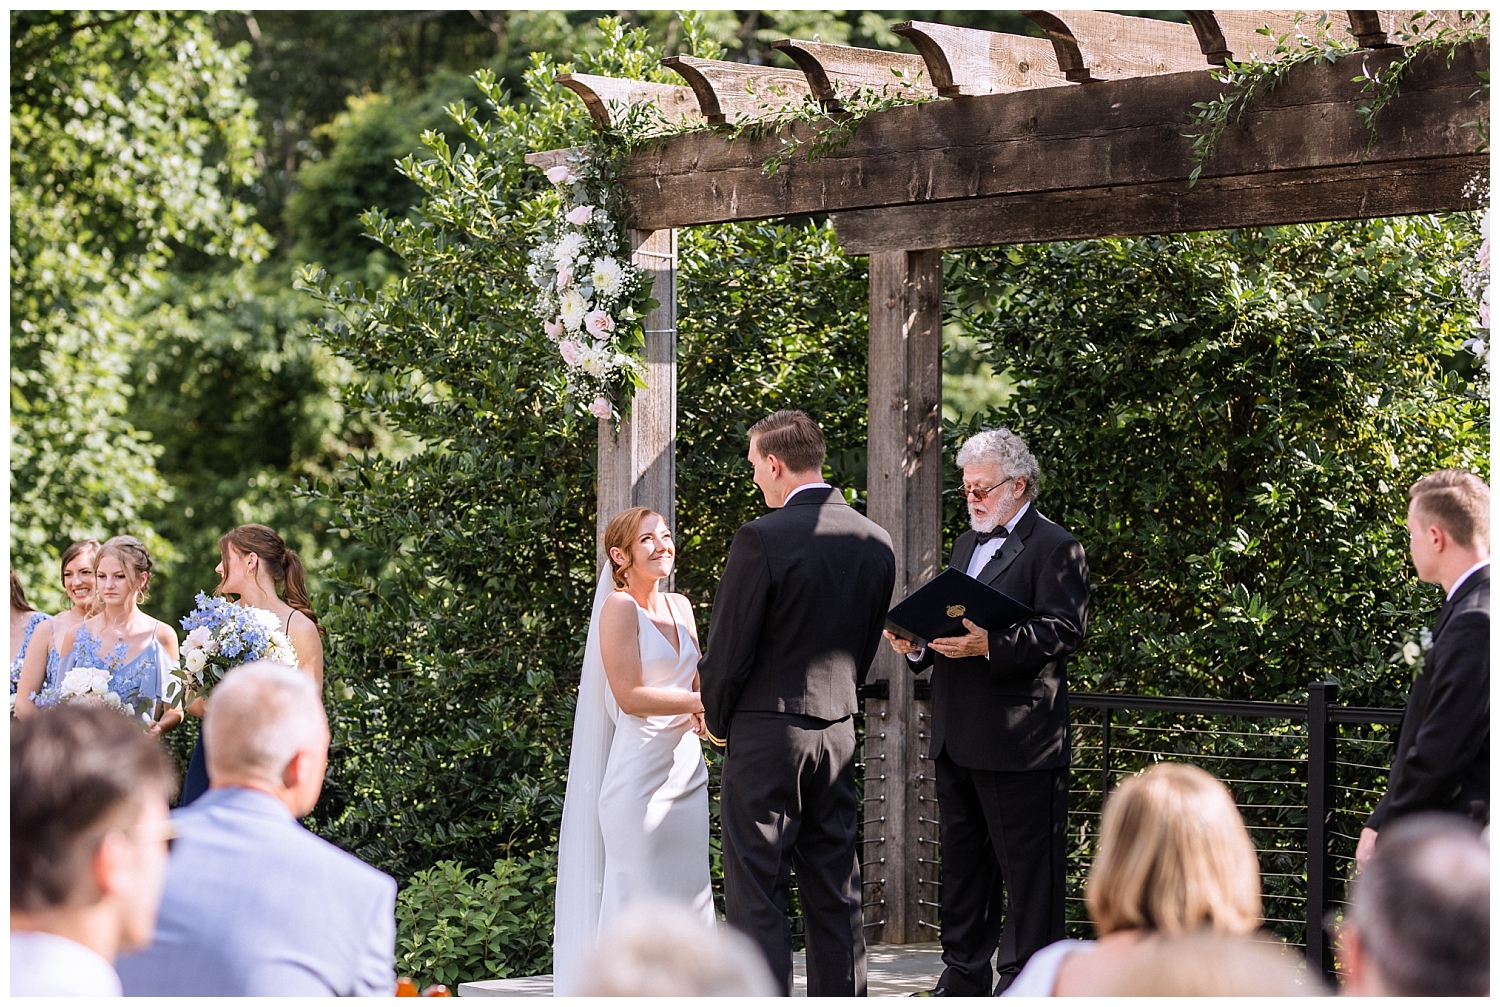 Ceremony shots at Fleetwood Farm Winery wedding in Leesburg, Virginia